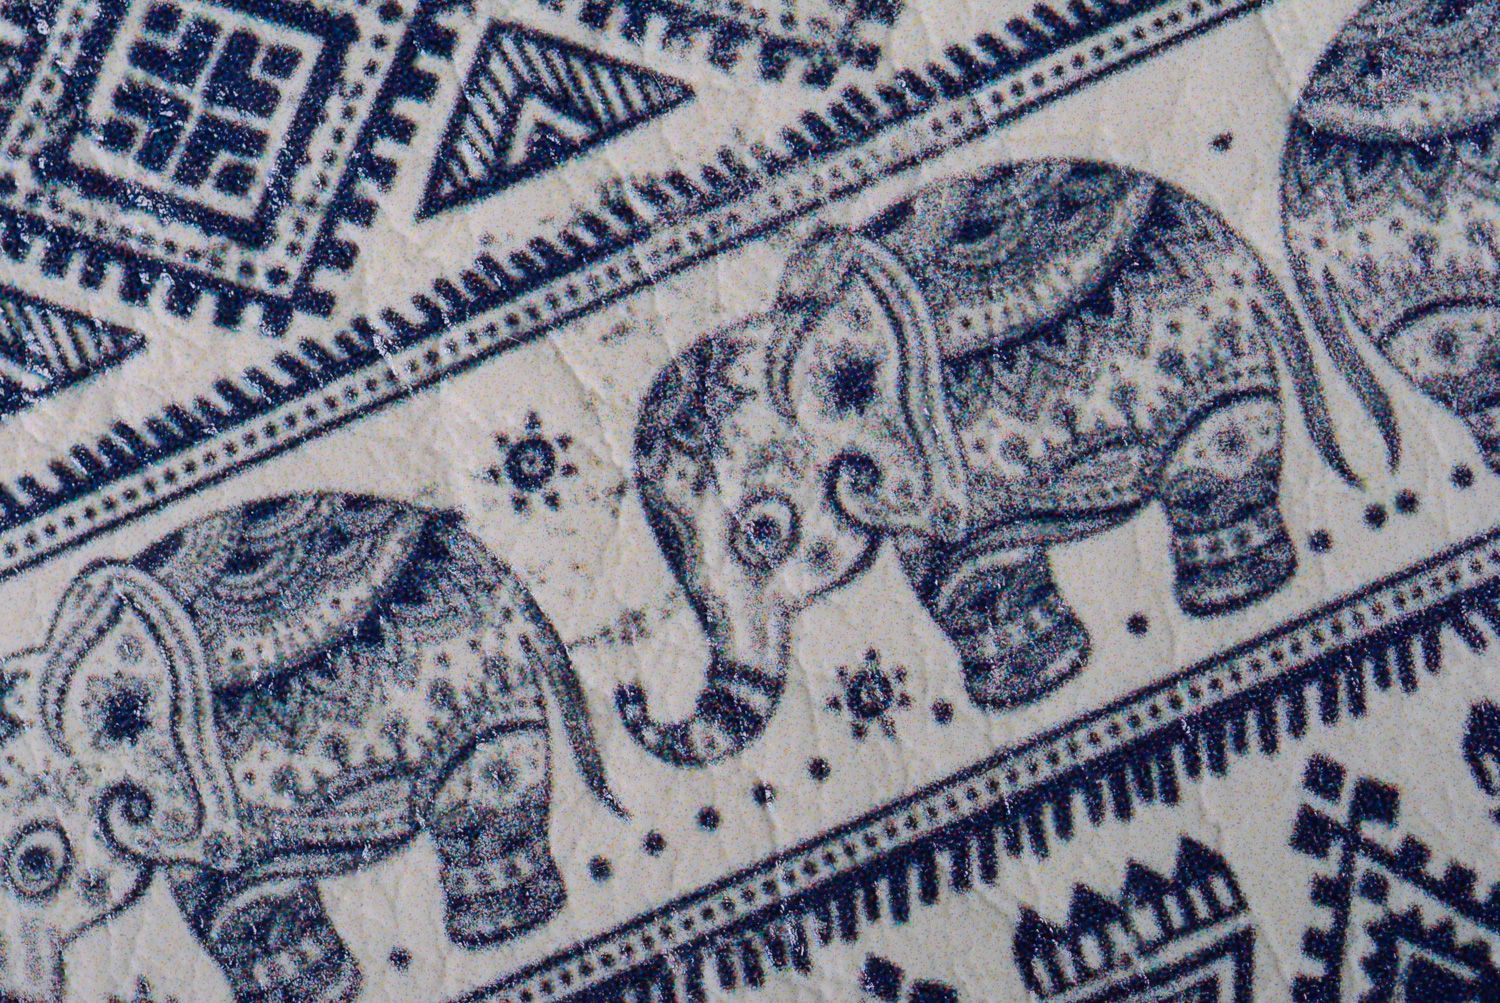 Обложка на паспорт из кожзама со слониками фото 3